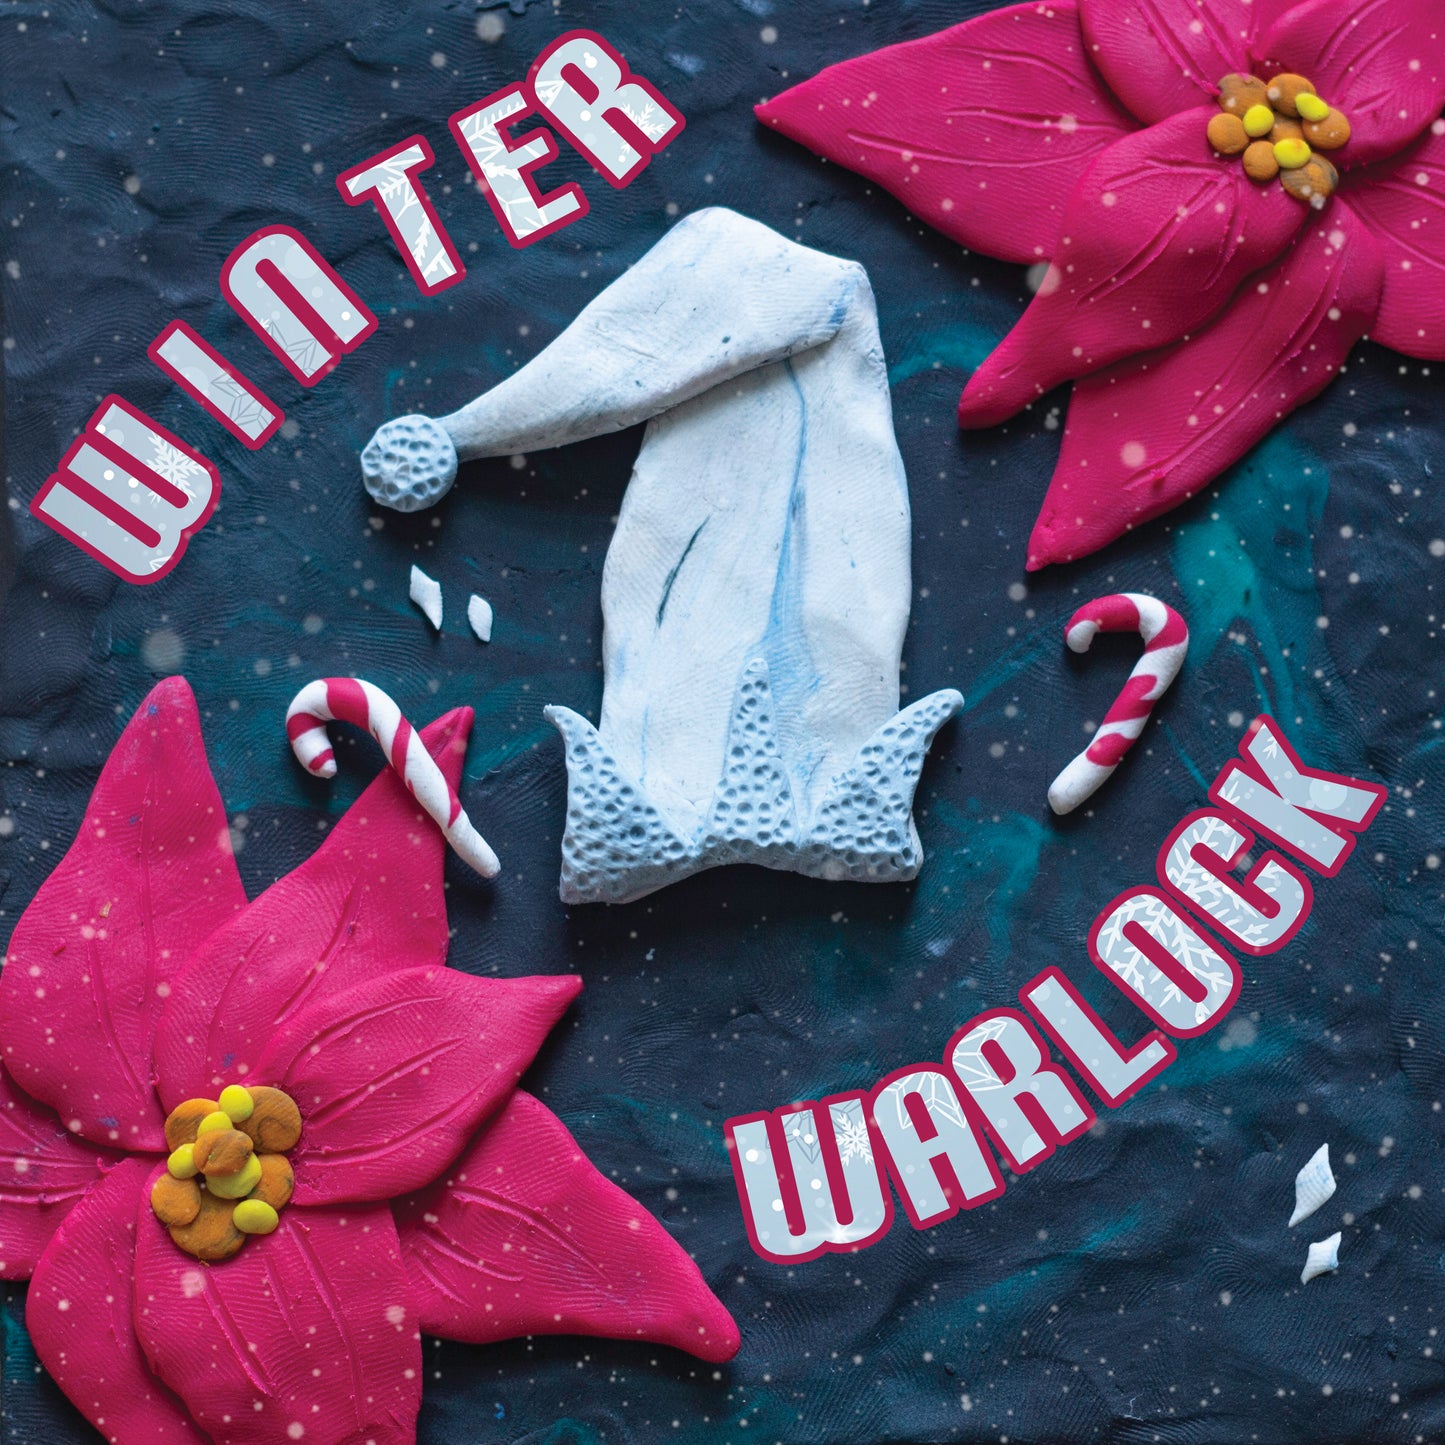 Winter Warlock - Stereoplasm